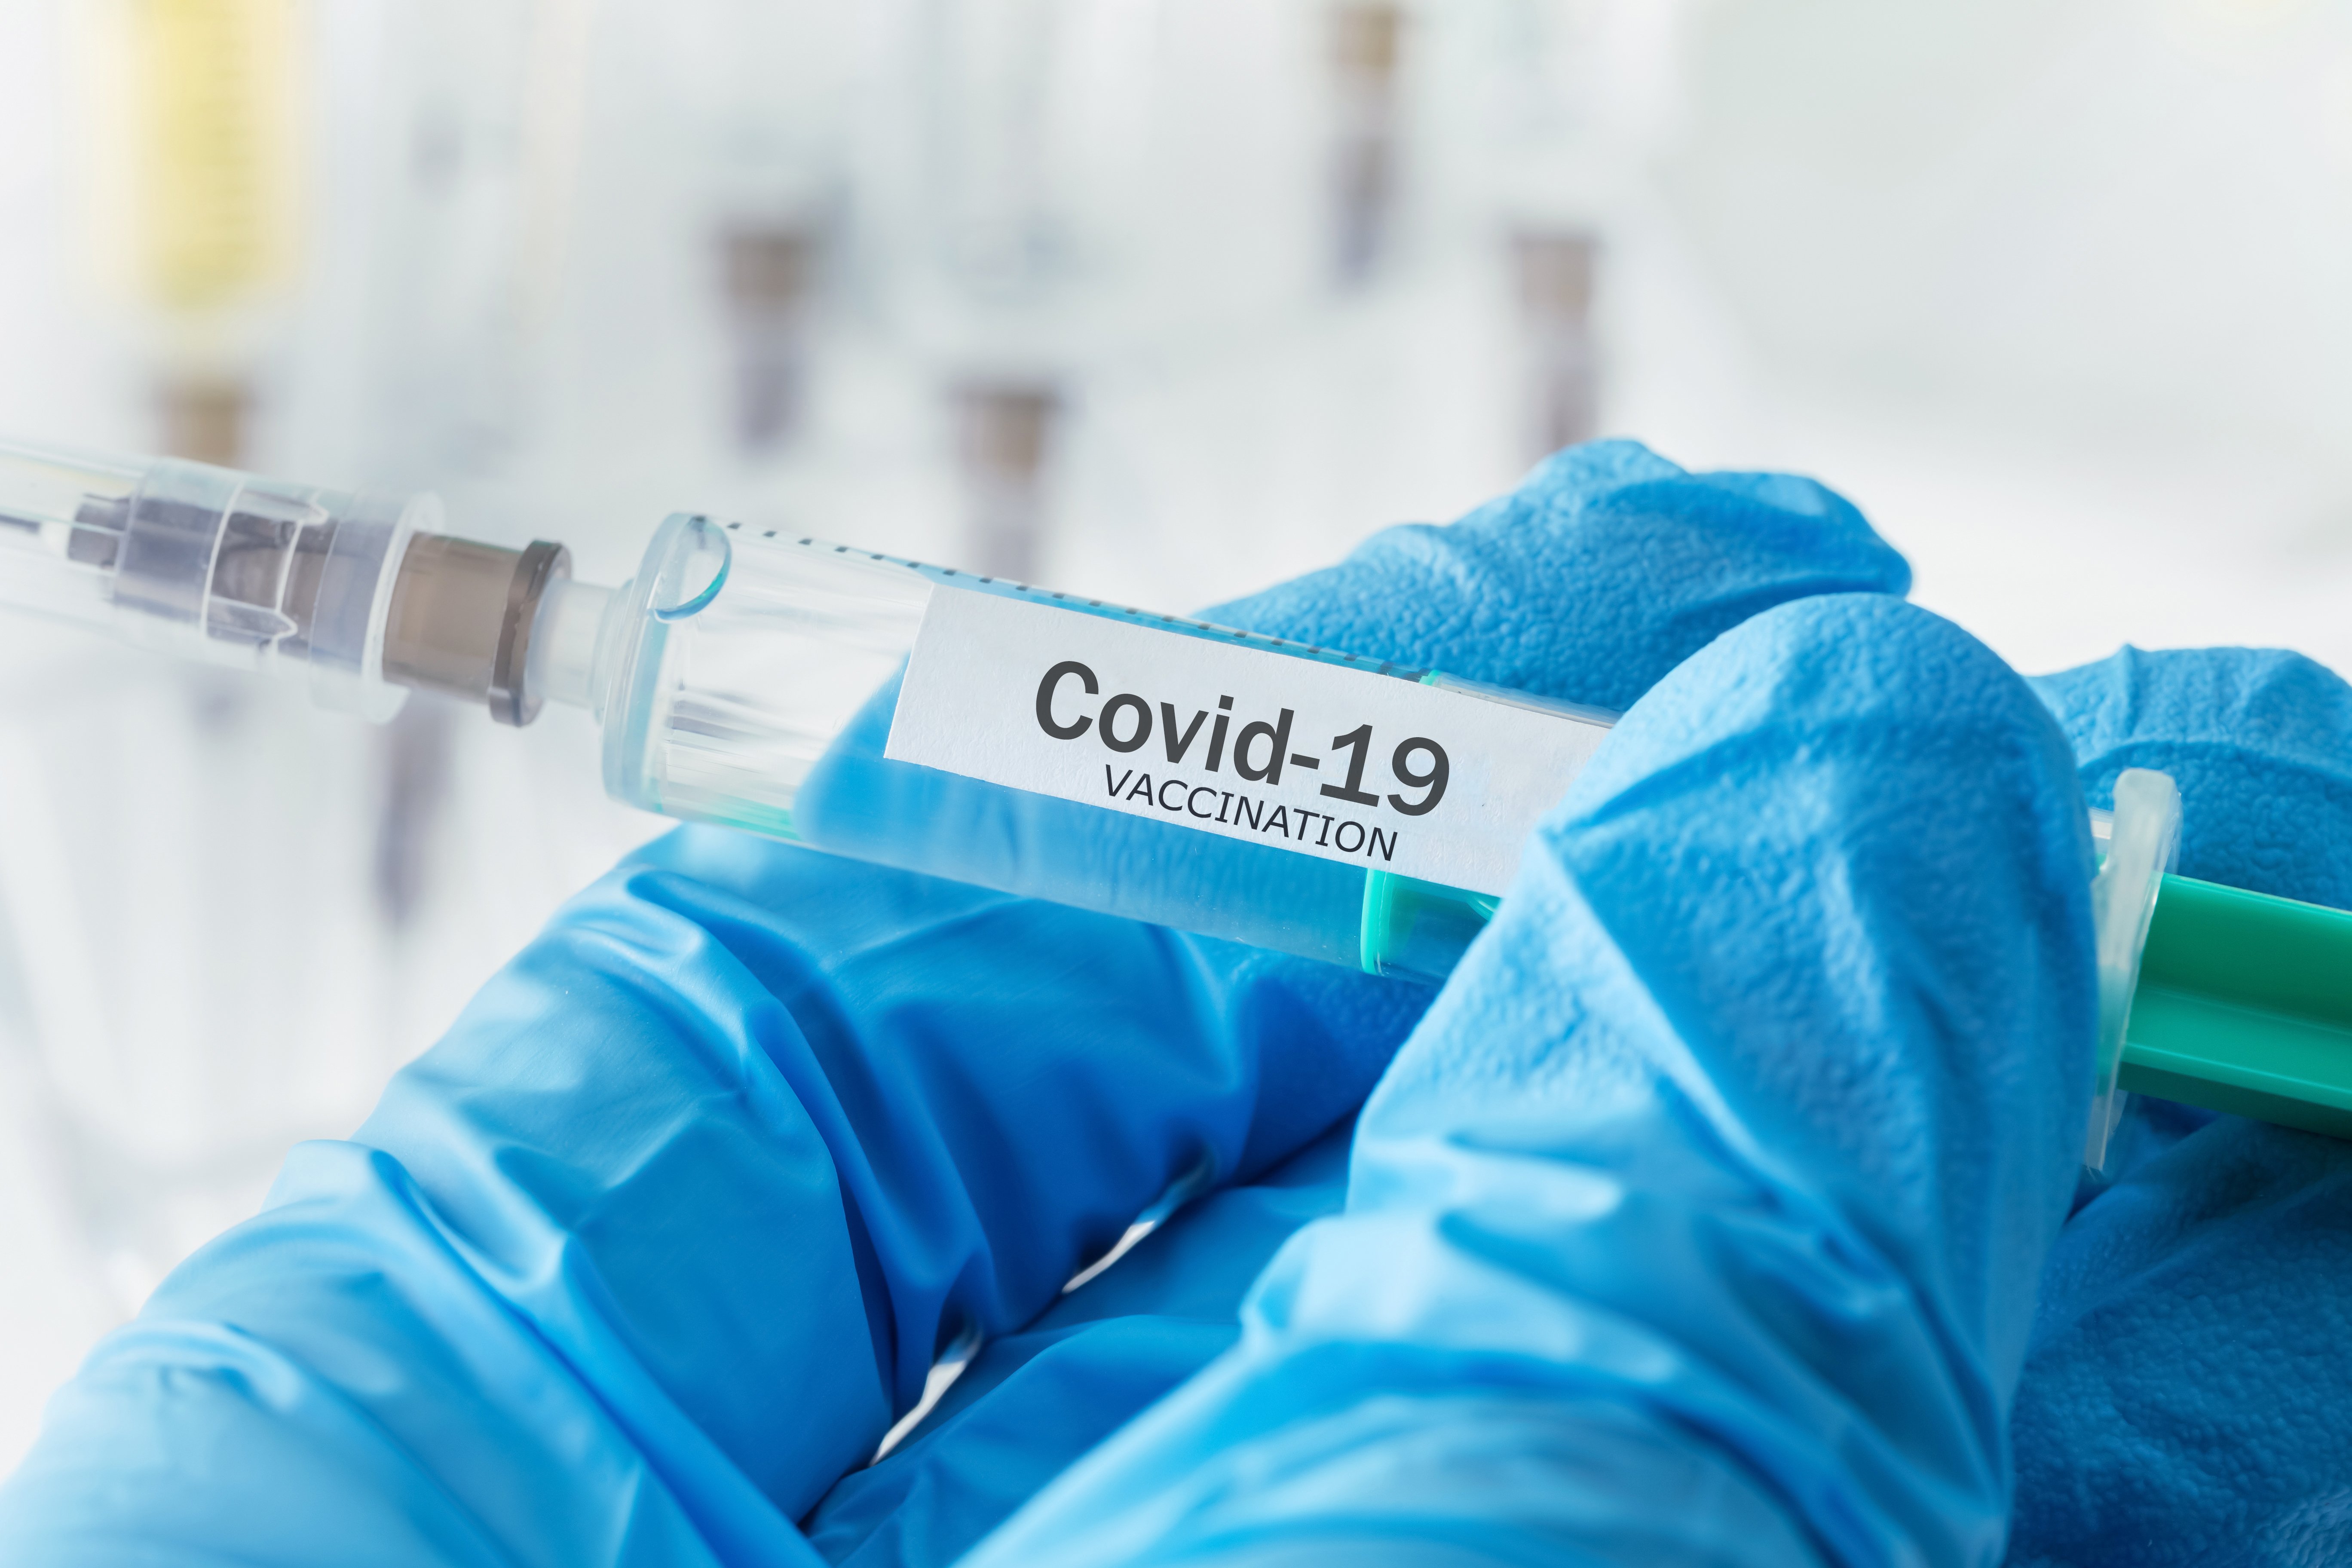 Ein Covid-19-Coronavirus-Impfkonzept | Quelle: Shutterstock